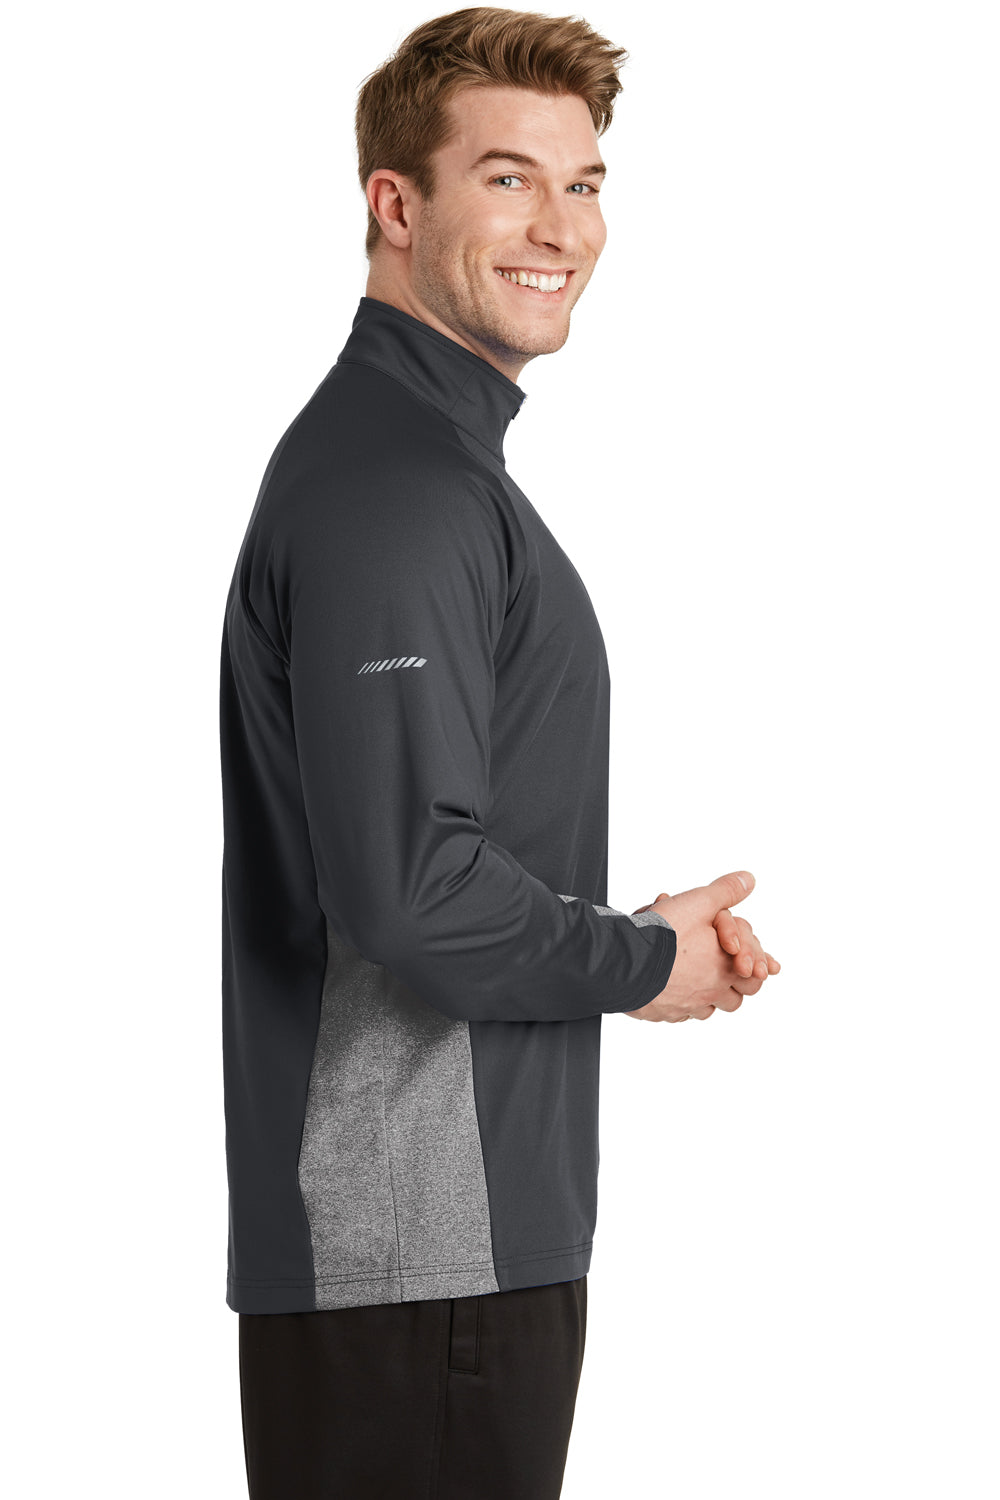 Sport-Tek ST854 Mens Sport-Wick Moisture Wicking 1/4 Zip Sweatshirt Charcoal Grey/Heather Charcoal Grey Side